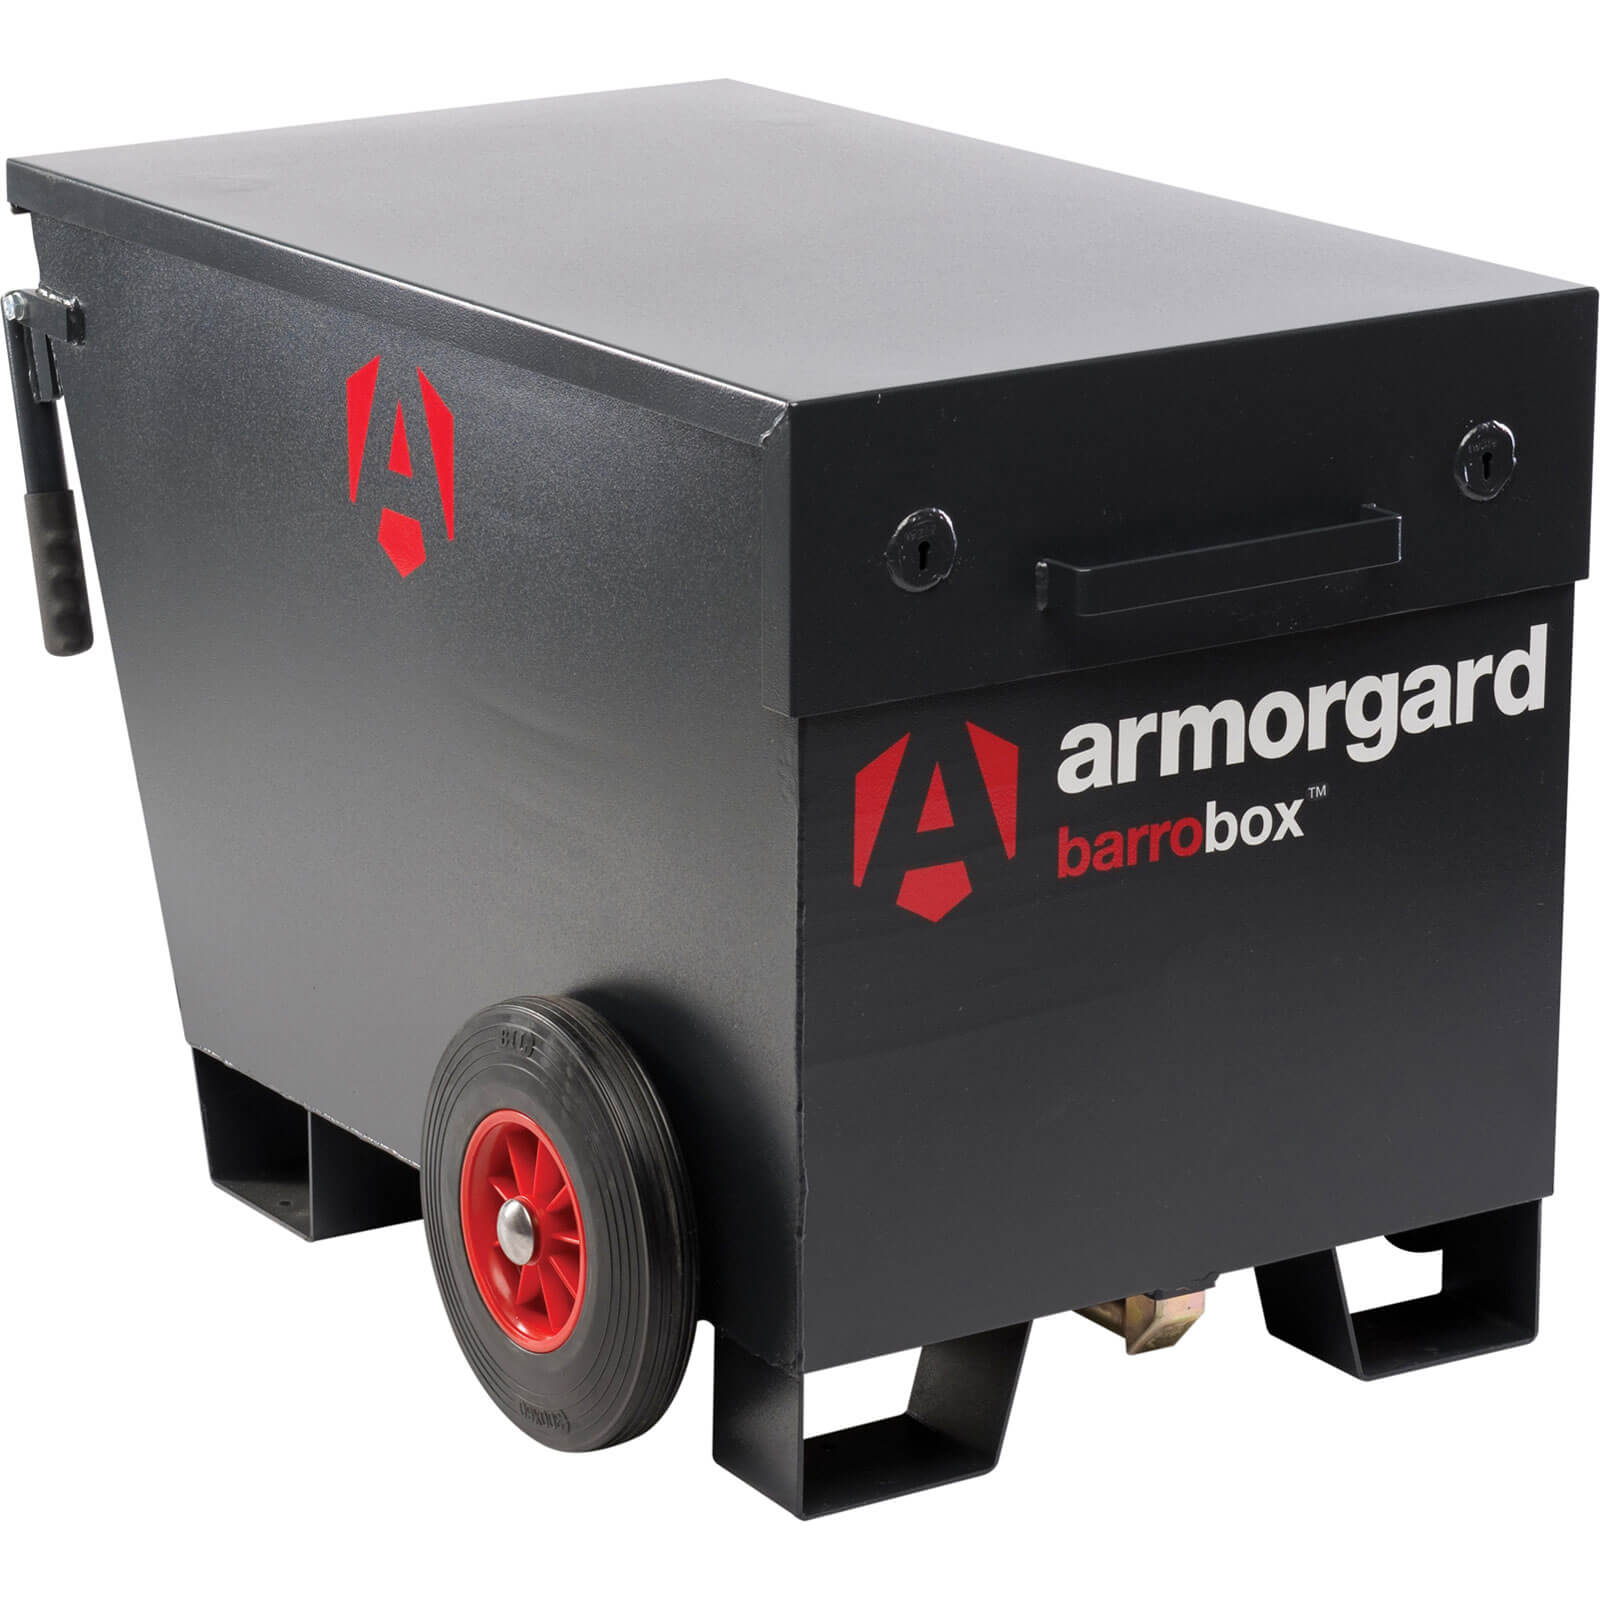 Armorgard Barrobox Mobile Site Secure Tool Box 740mm 1095mm 720mm